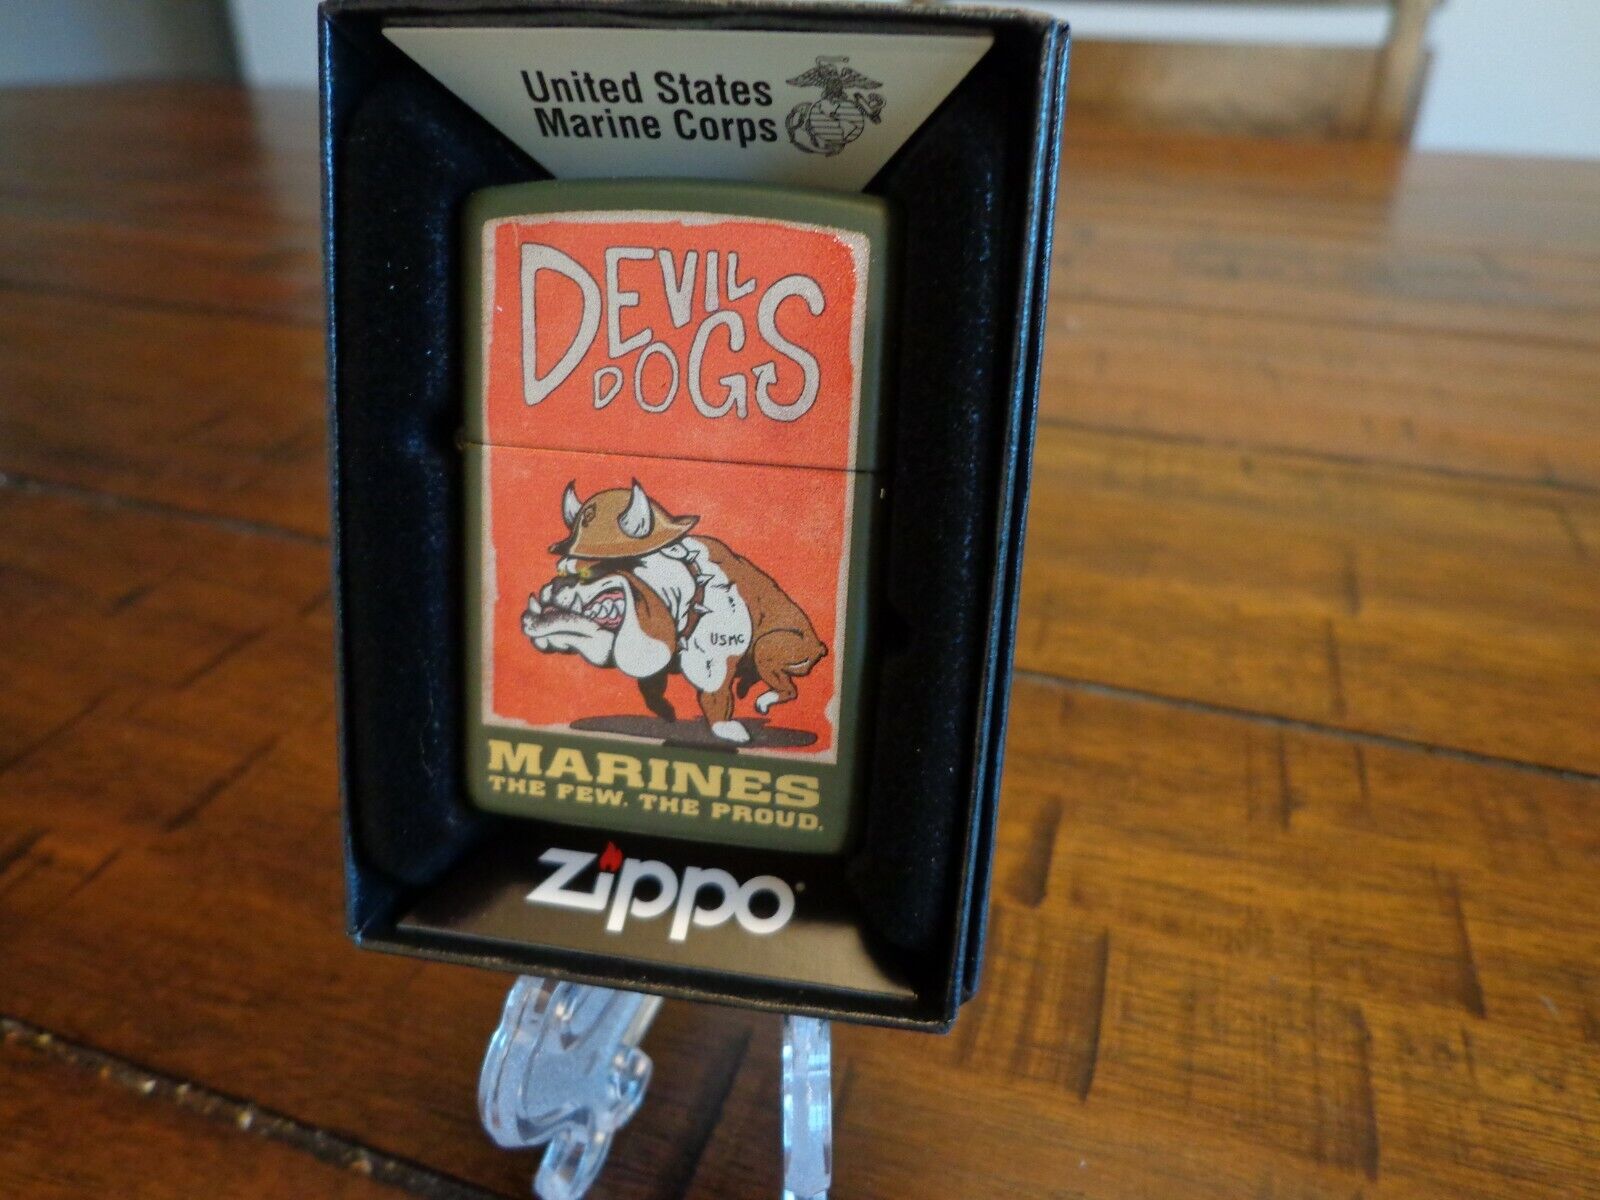 USMC UNITED STATES MARINE CORPS BULLDOG DEVIL DOGS THE FEW PROUD ZIPPO LIGHTER